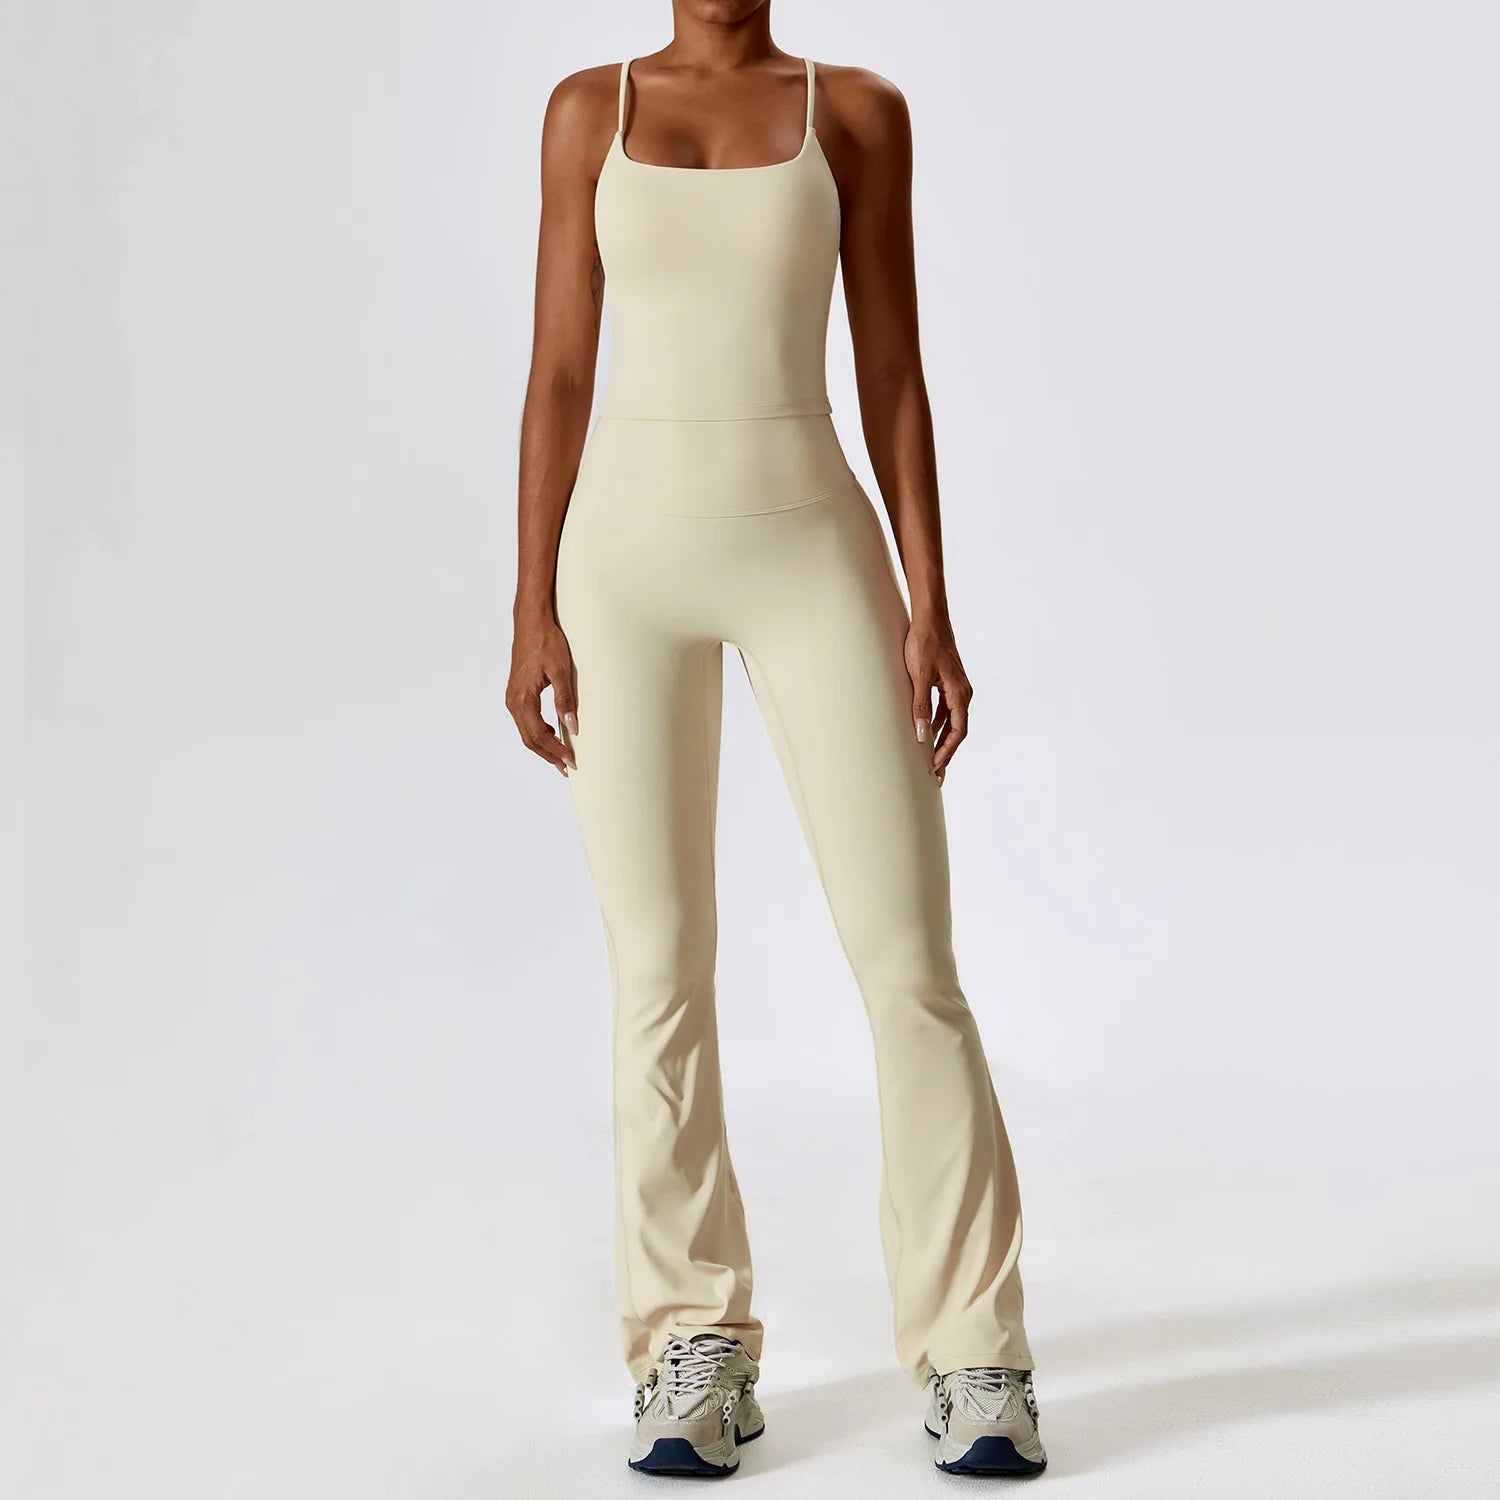 Yoga Set 2PCS Seamless Women Sportswear Workout Clothes Athletic Wear Gym Legging Fitness Bra Crop Top Long Sleeve Sports Suits